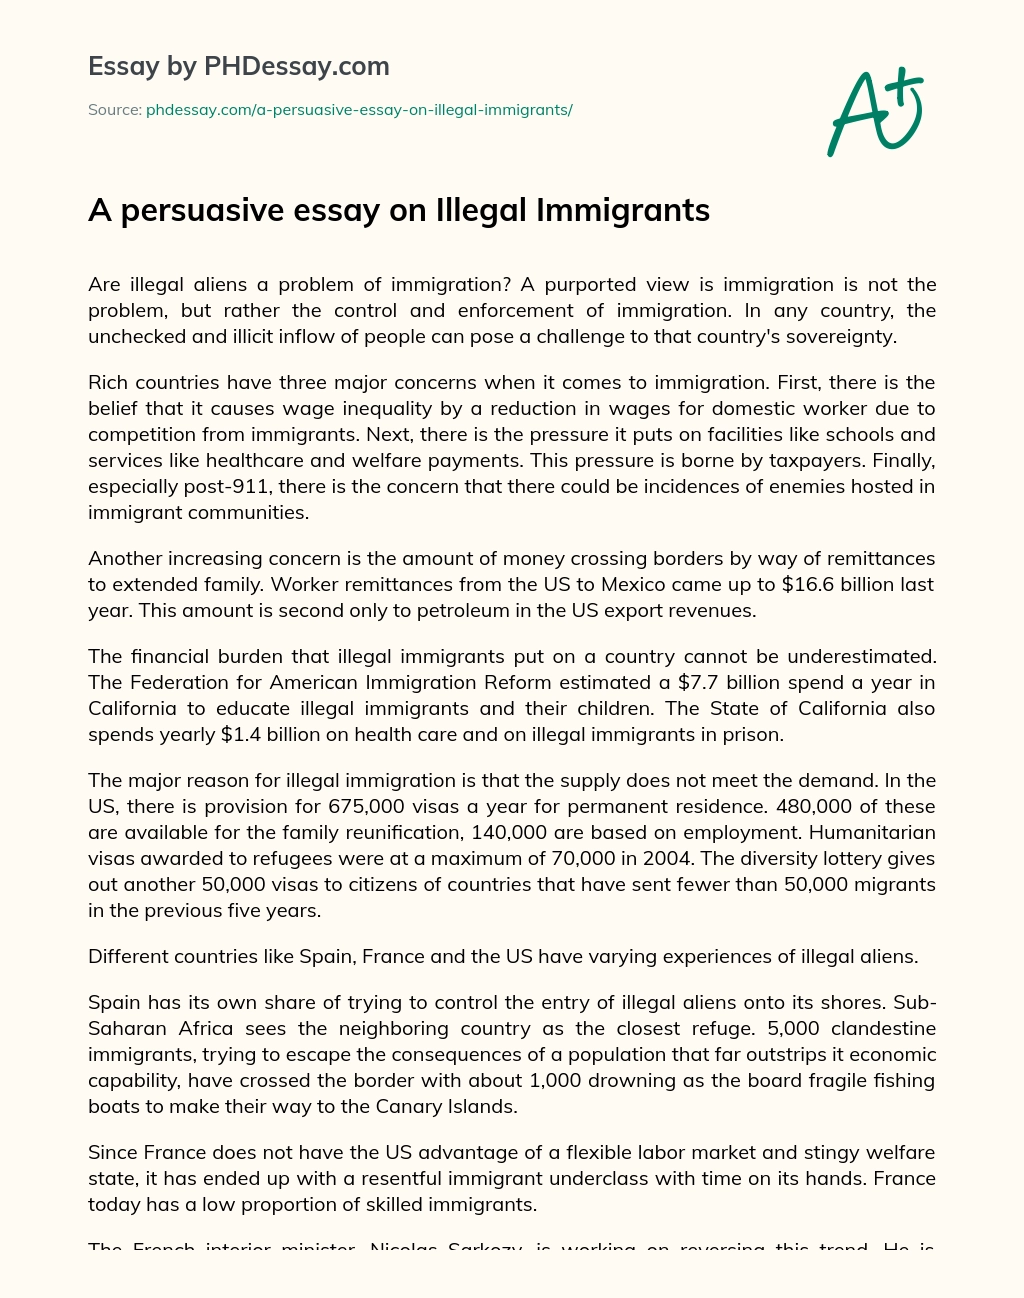 A persuasive essay on Illegal Immigrants essay